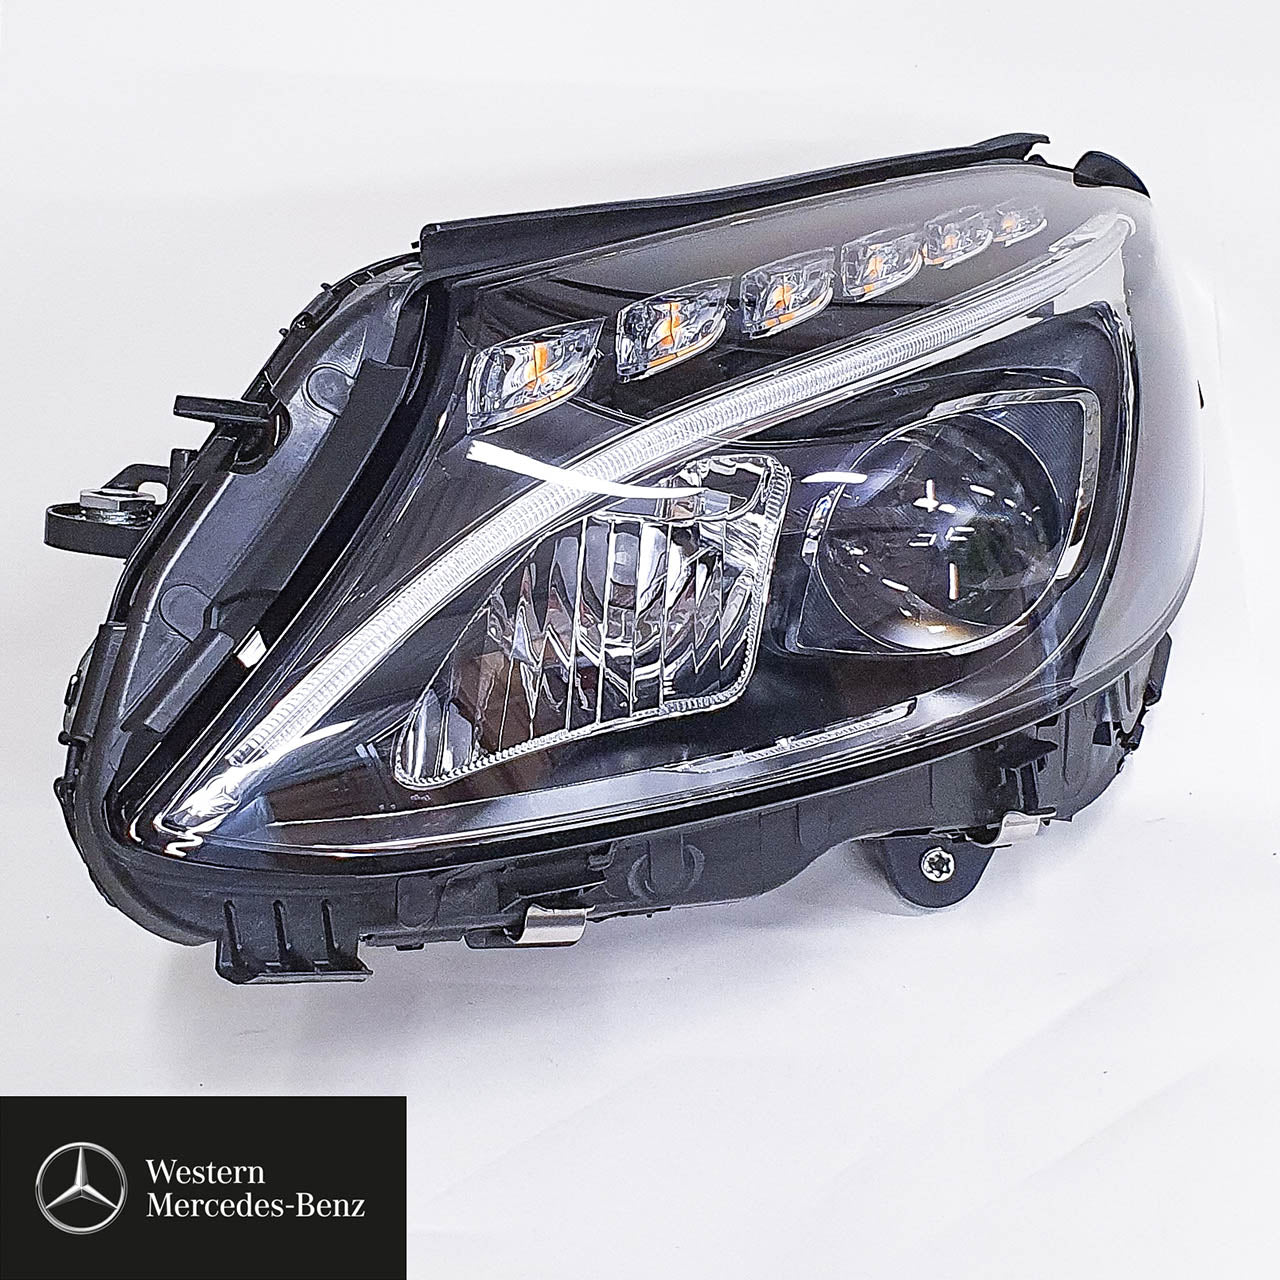 Genuine Mercedes-Benz headlamp C-Class 205 model series – Mercedes